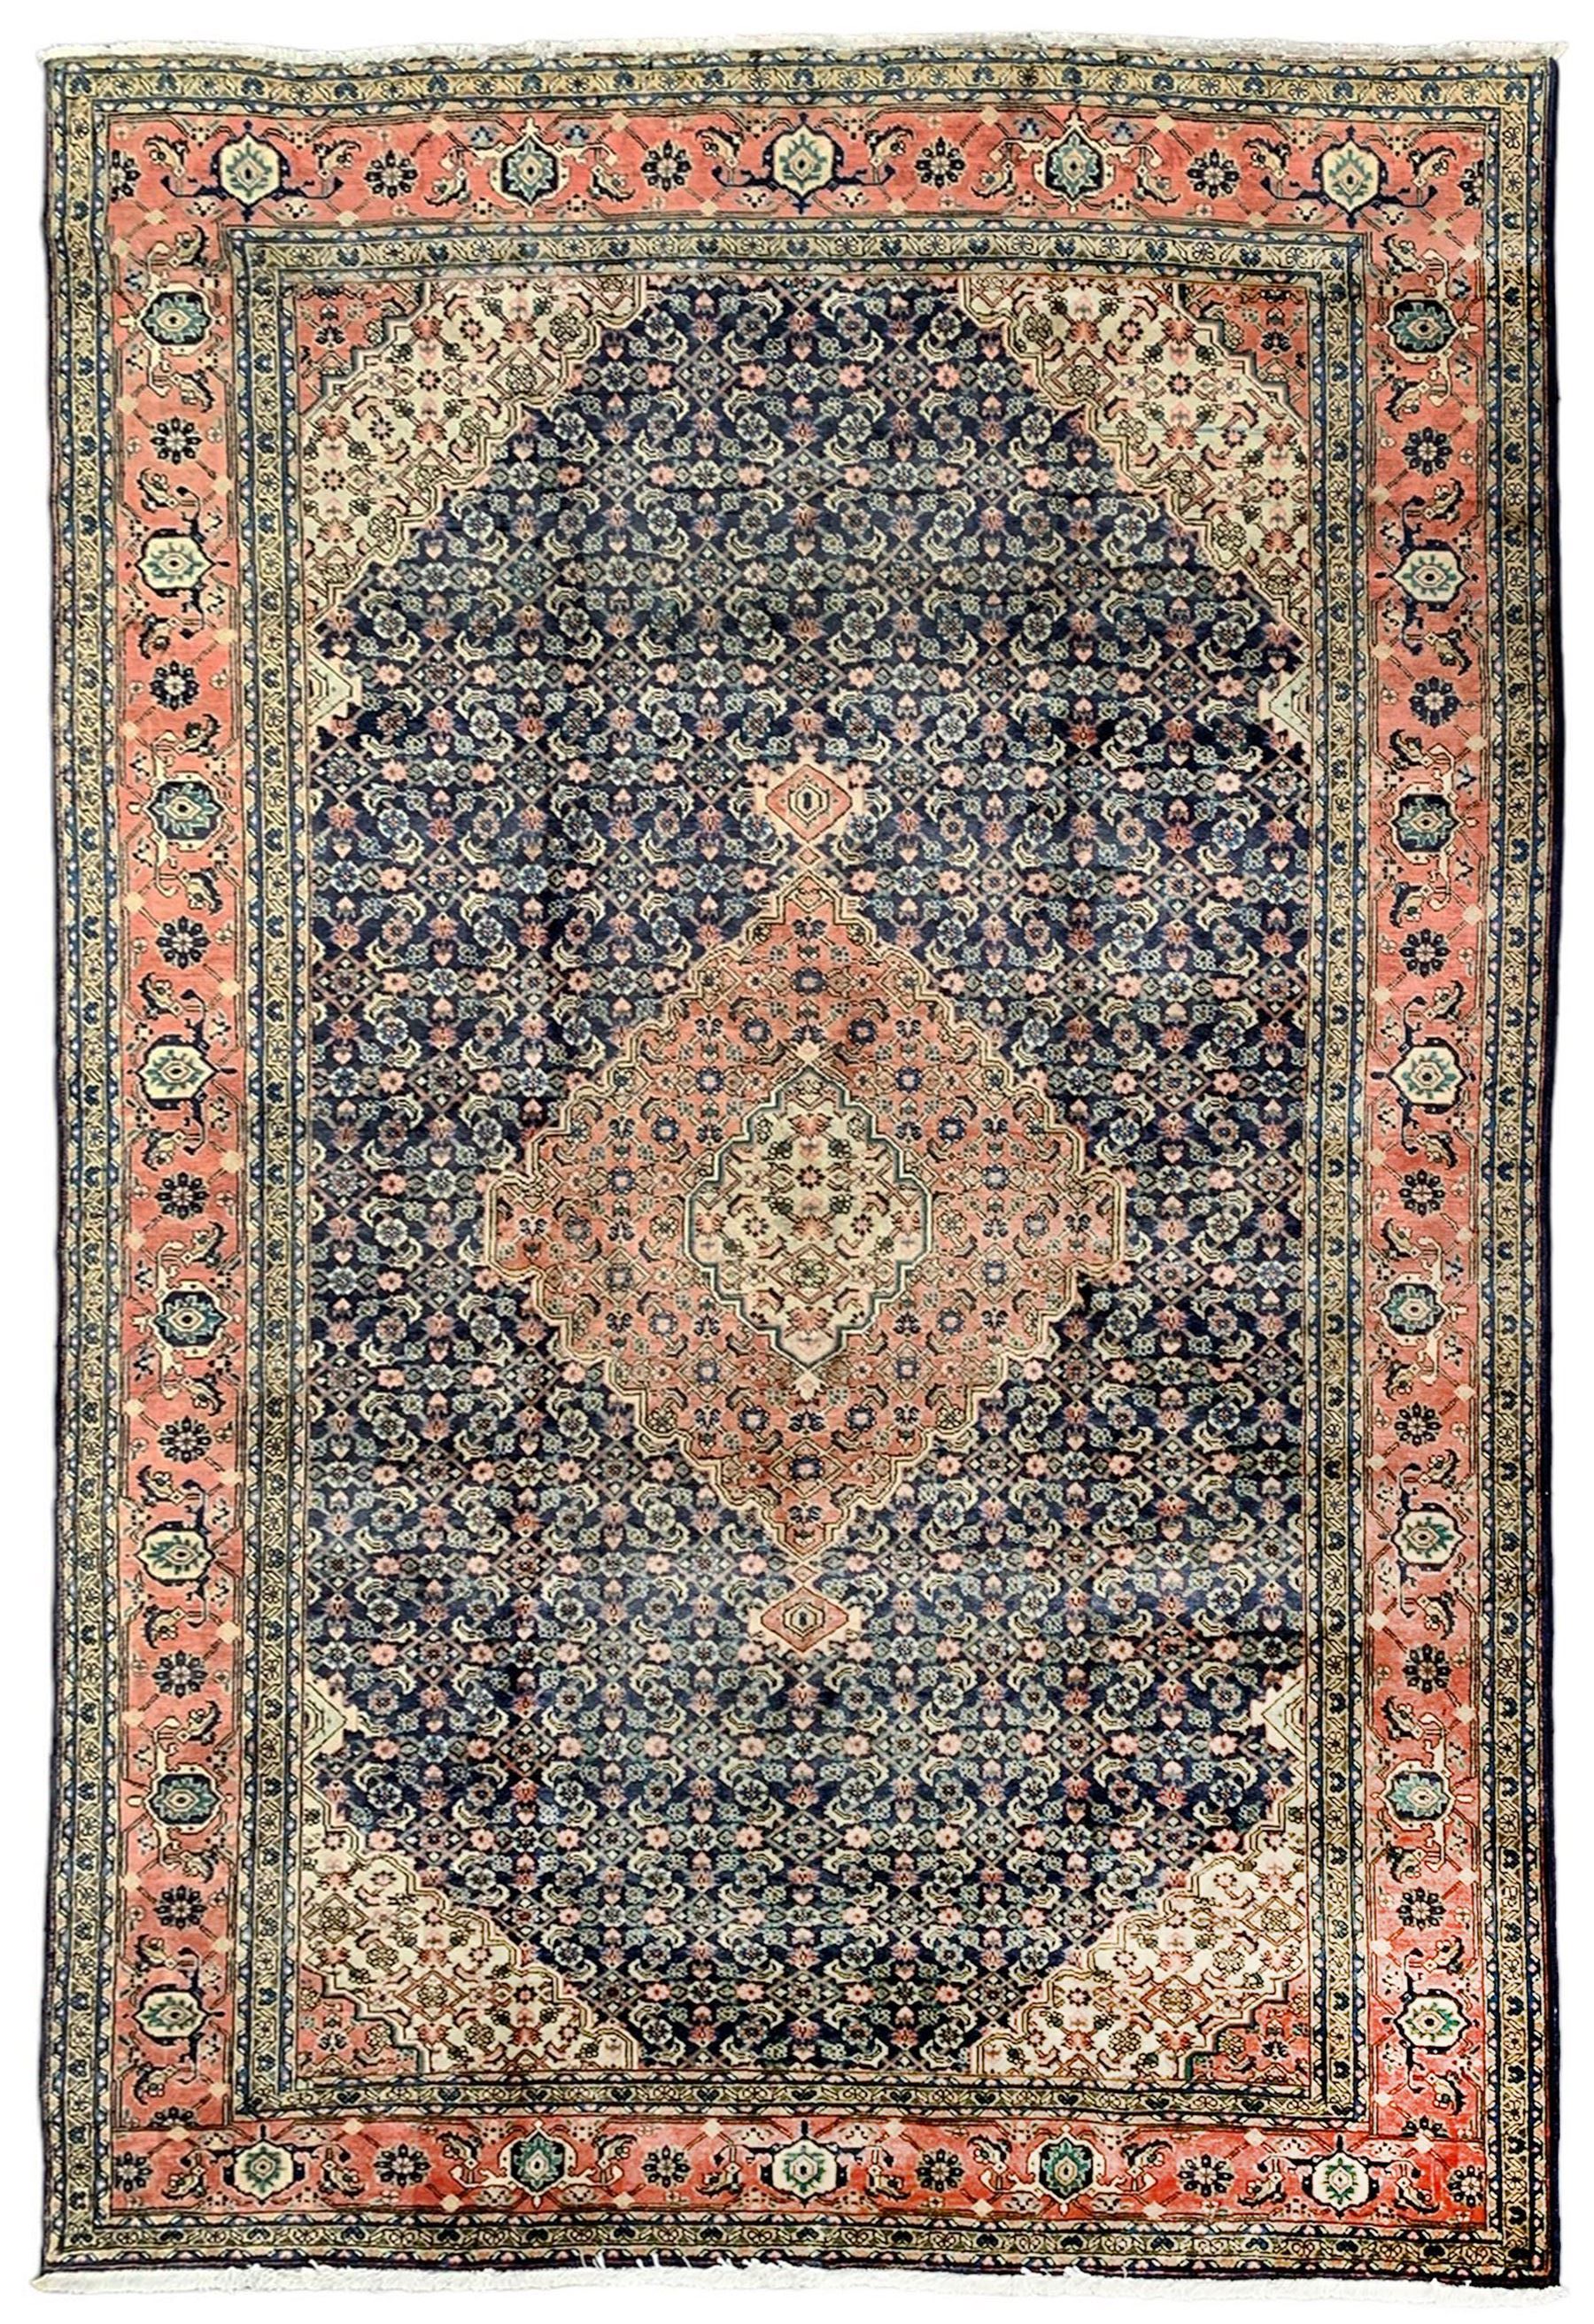 Persian pale indigo and peach ground rug